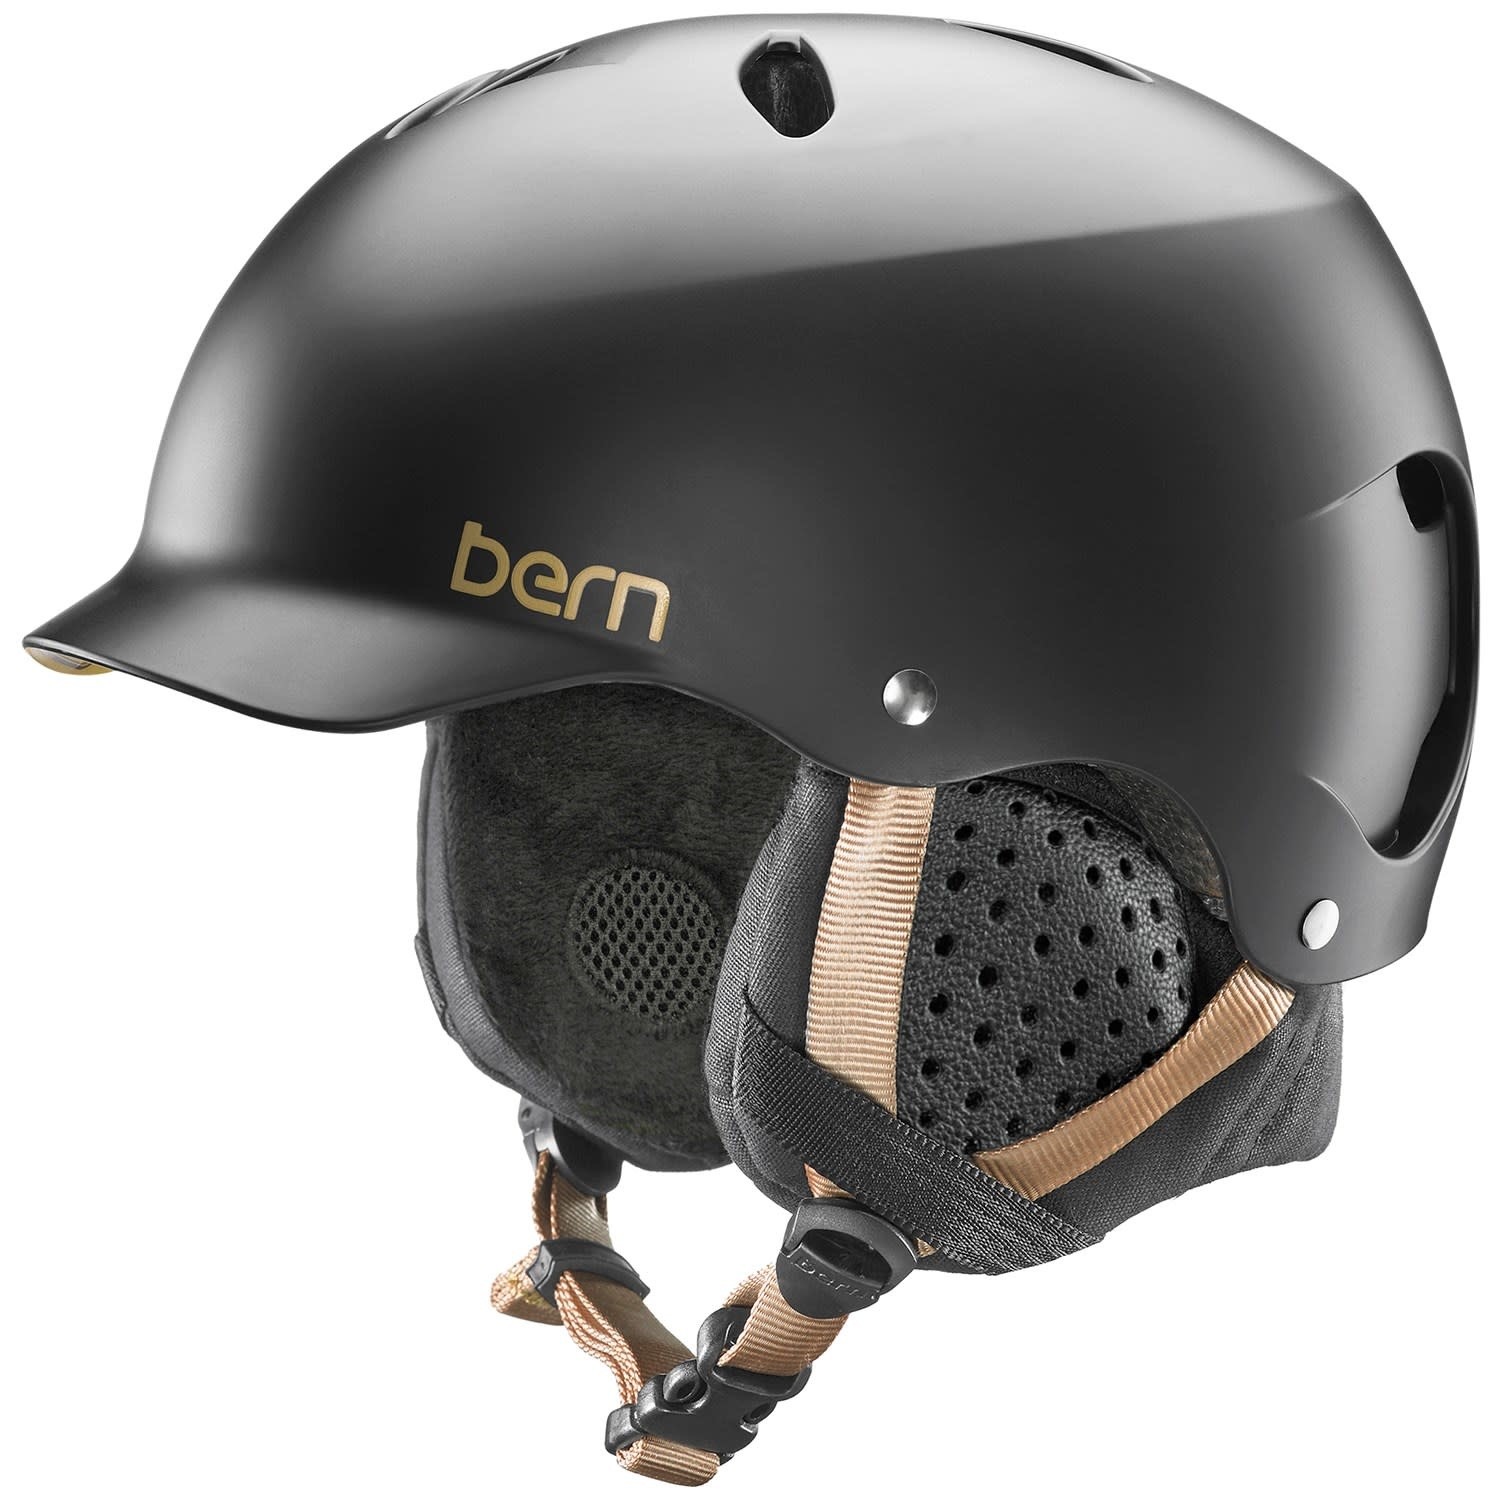 Bern Womens Helmet Size Chart